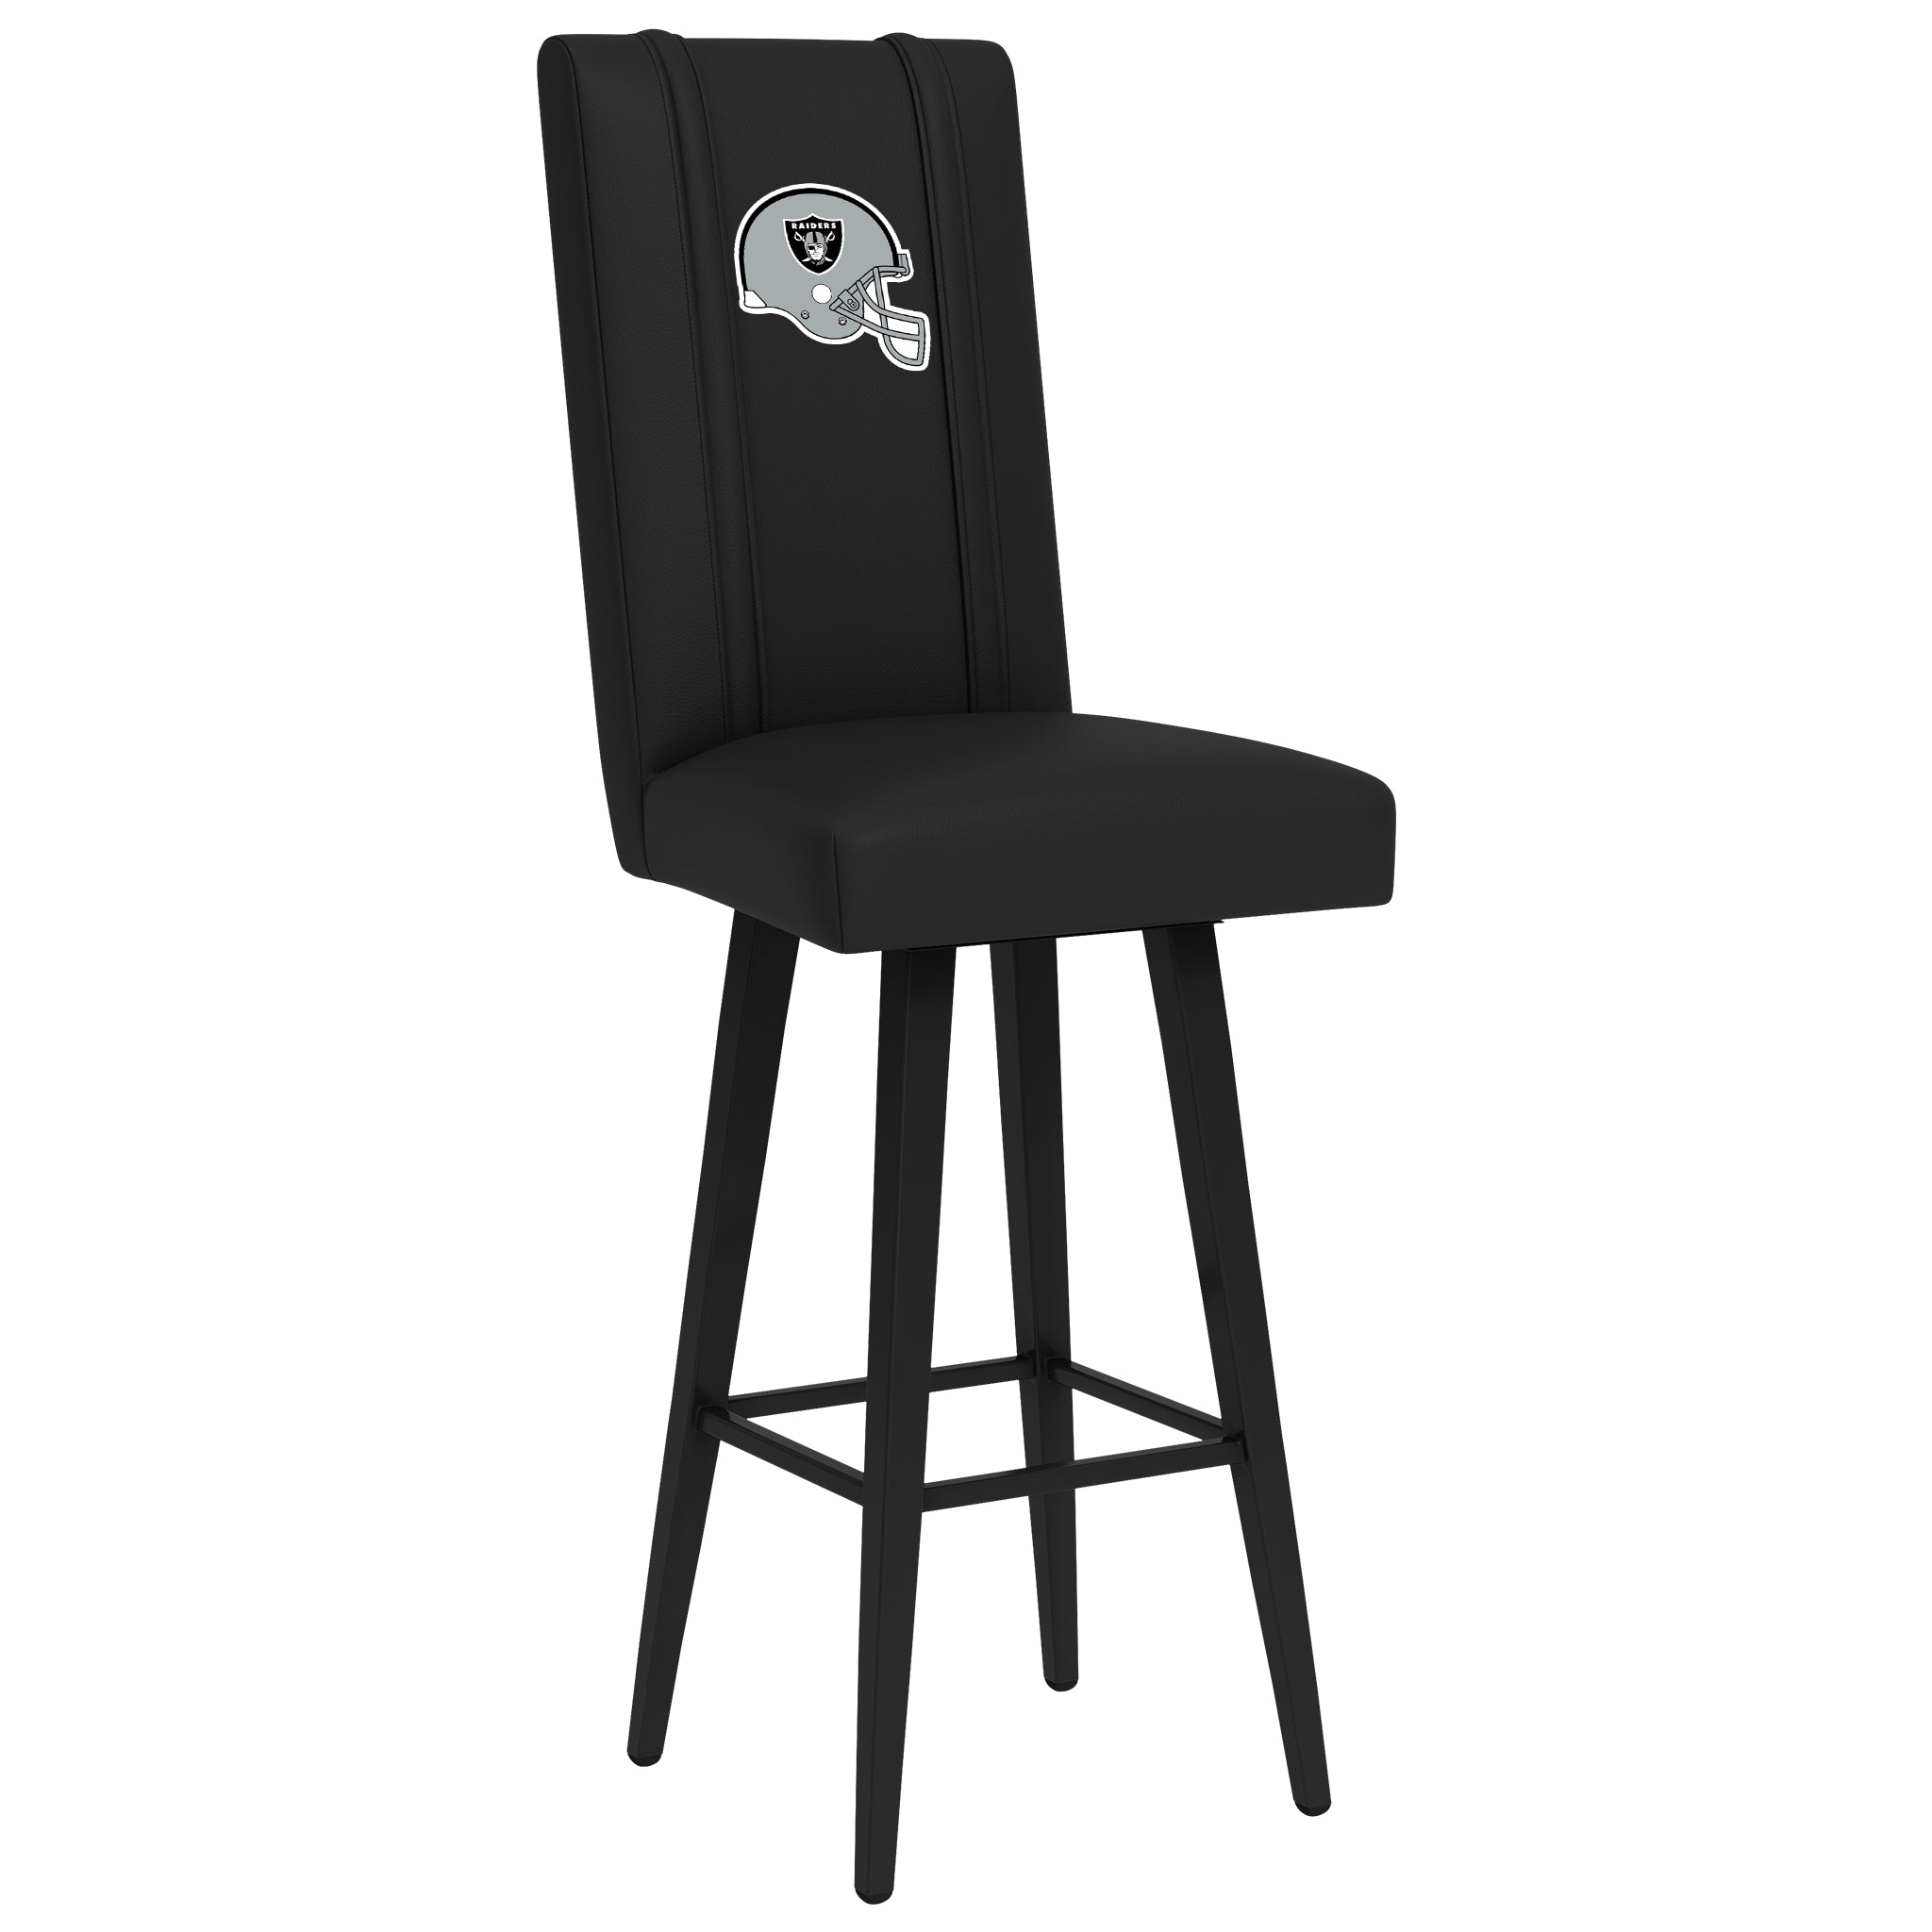 Las Vegas Raiders Swivel Bar Stool - Chair - Furniture - Kitchen